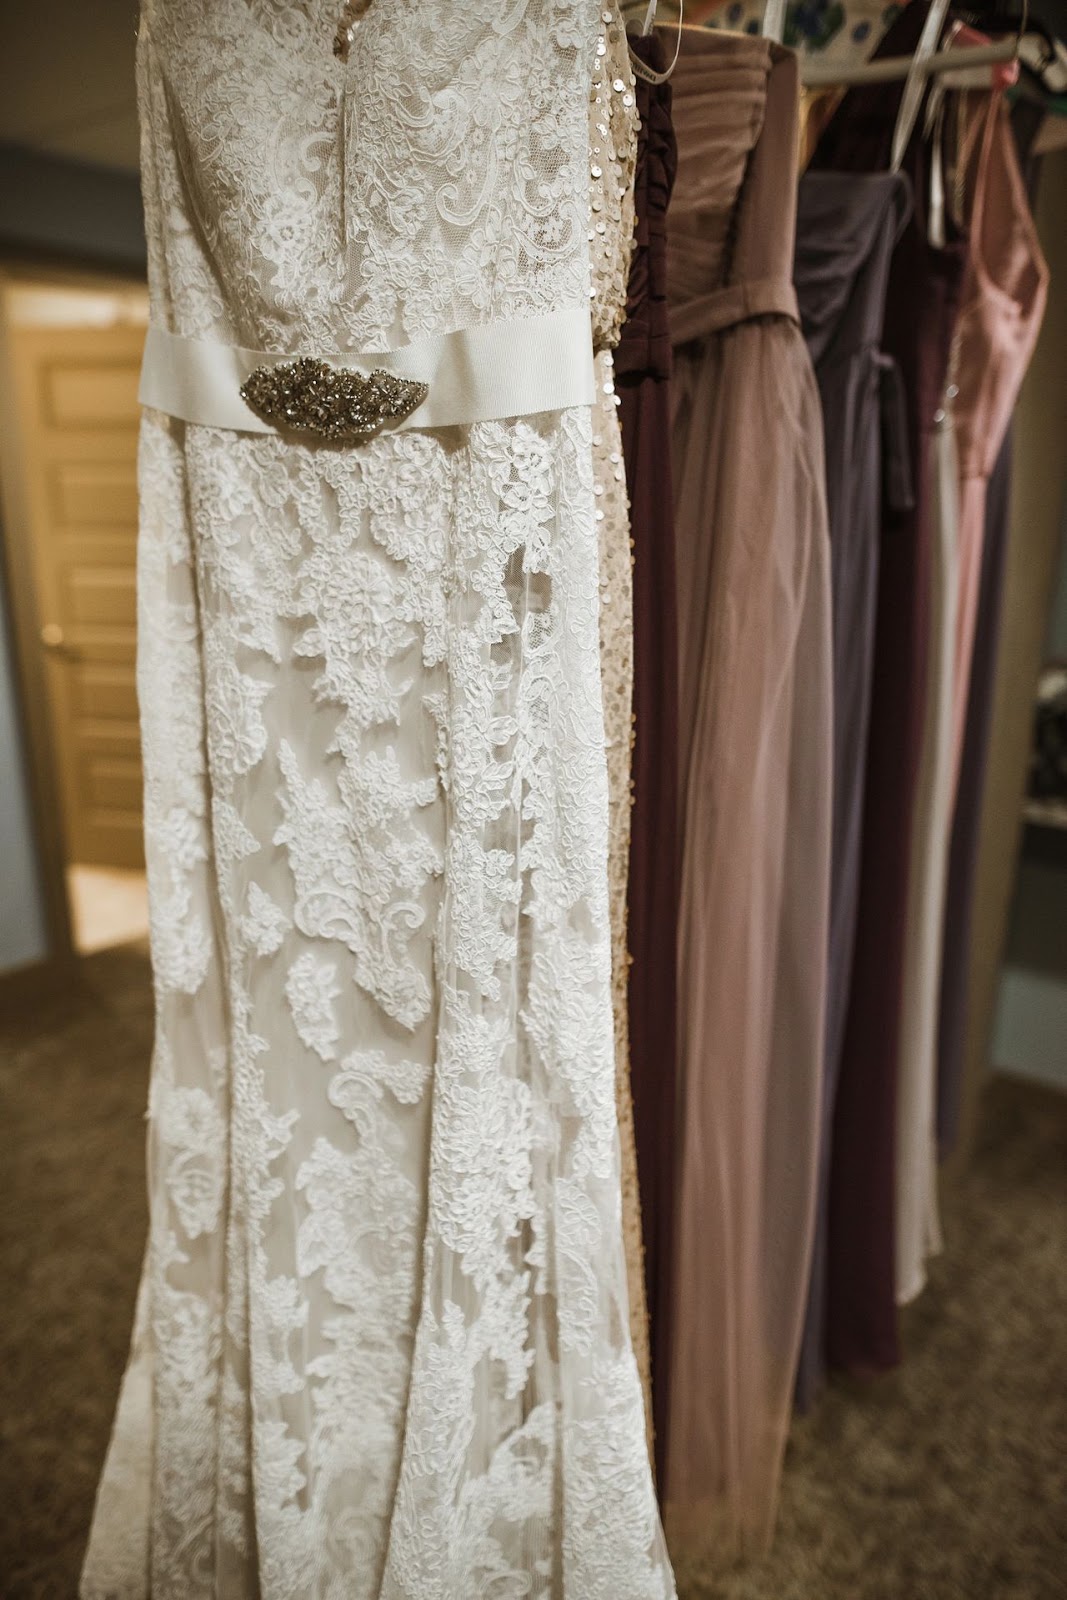 Wedding dress and bridesmaid dresses.